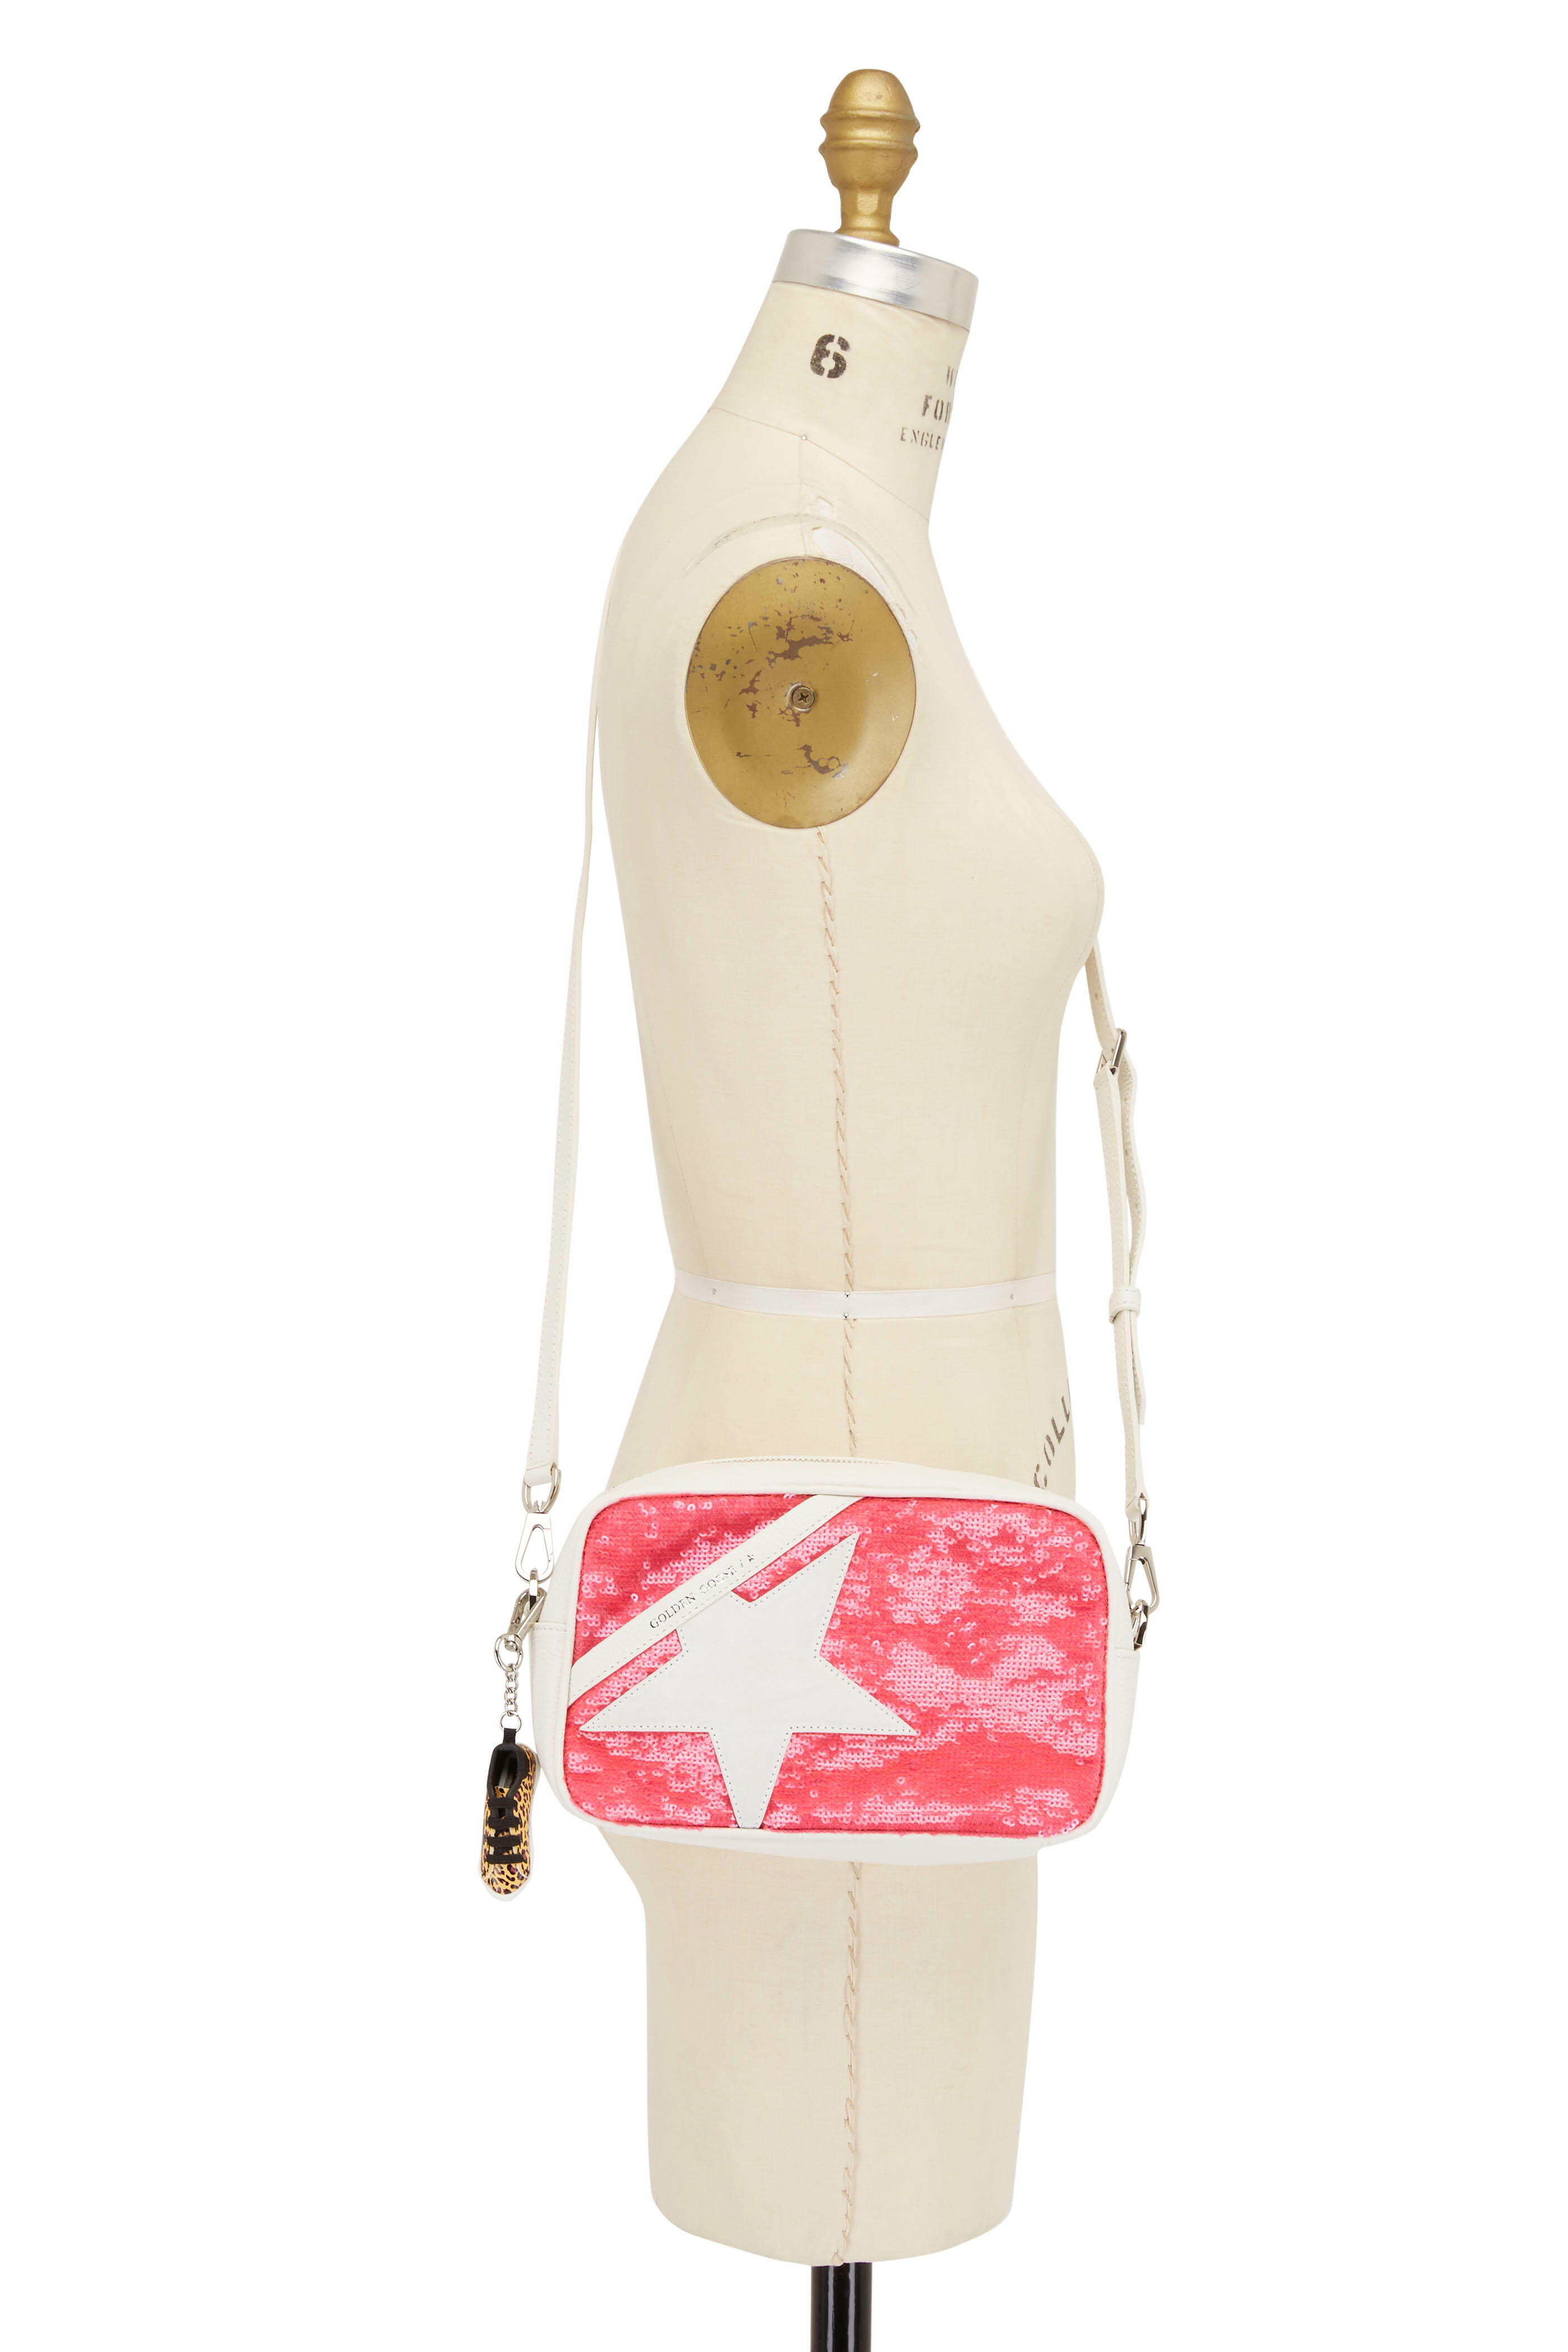 Golden Goose - White Leather & Pink Sequin Star Bag